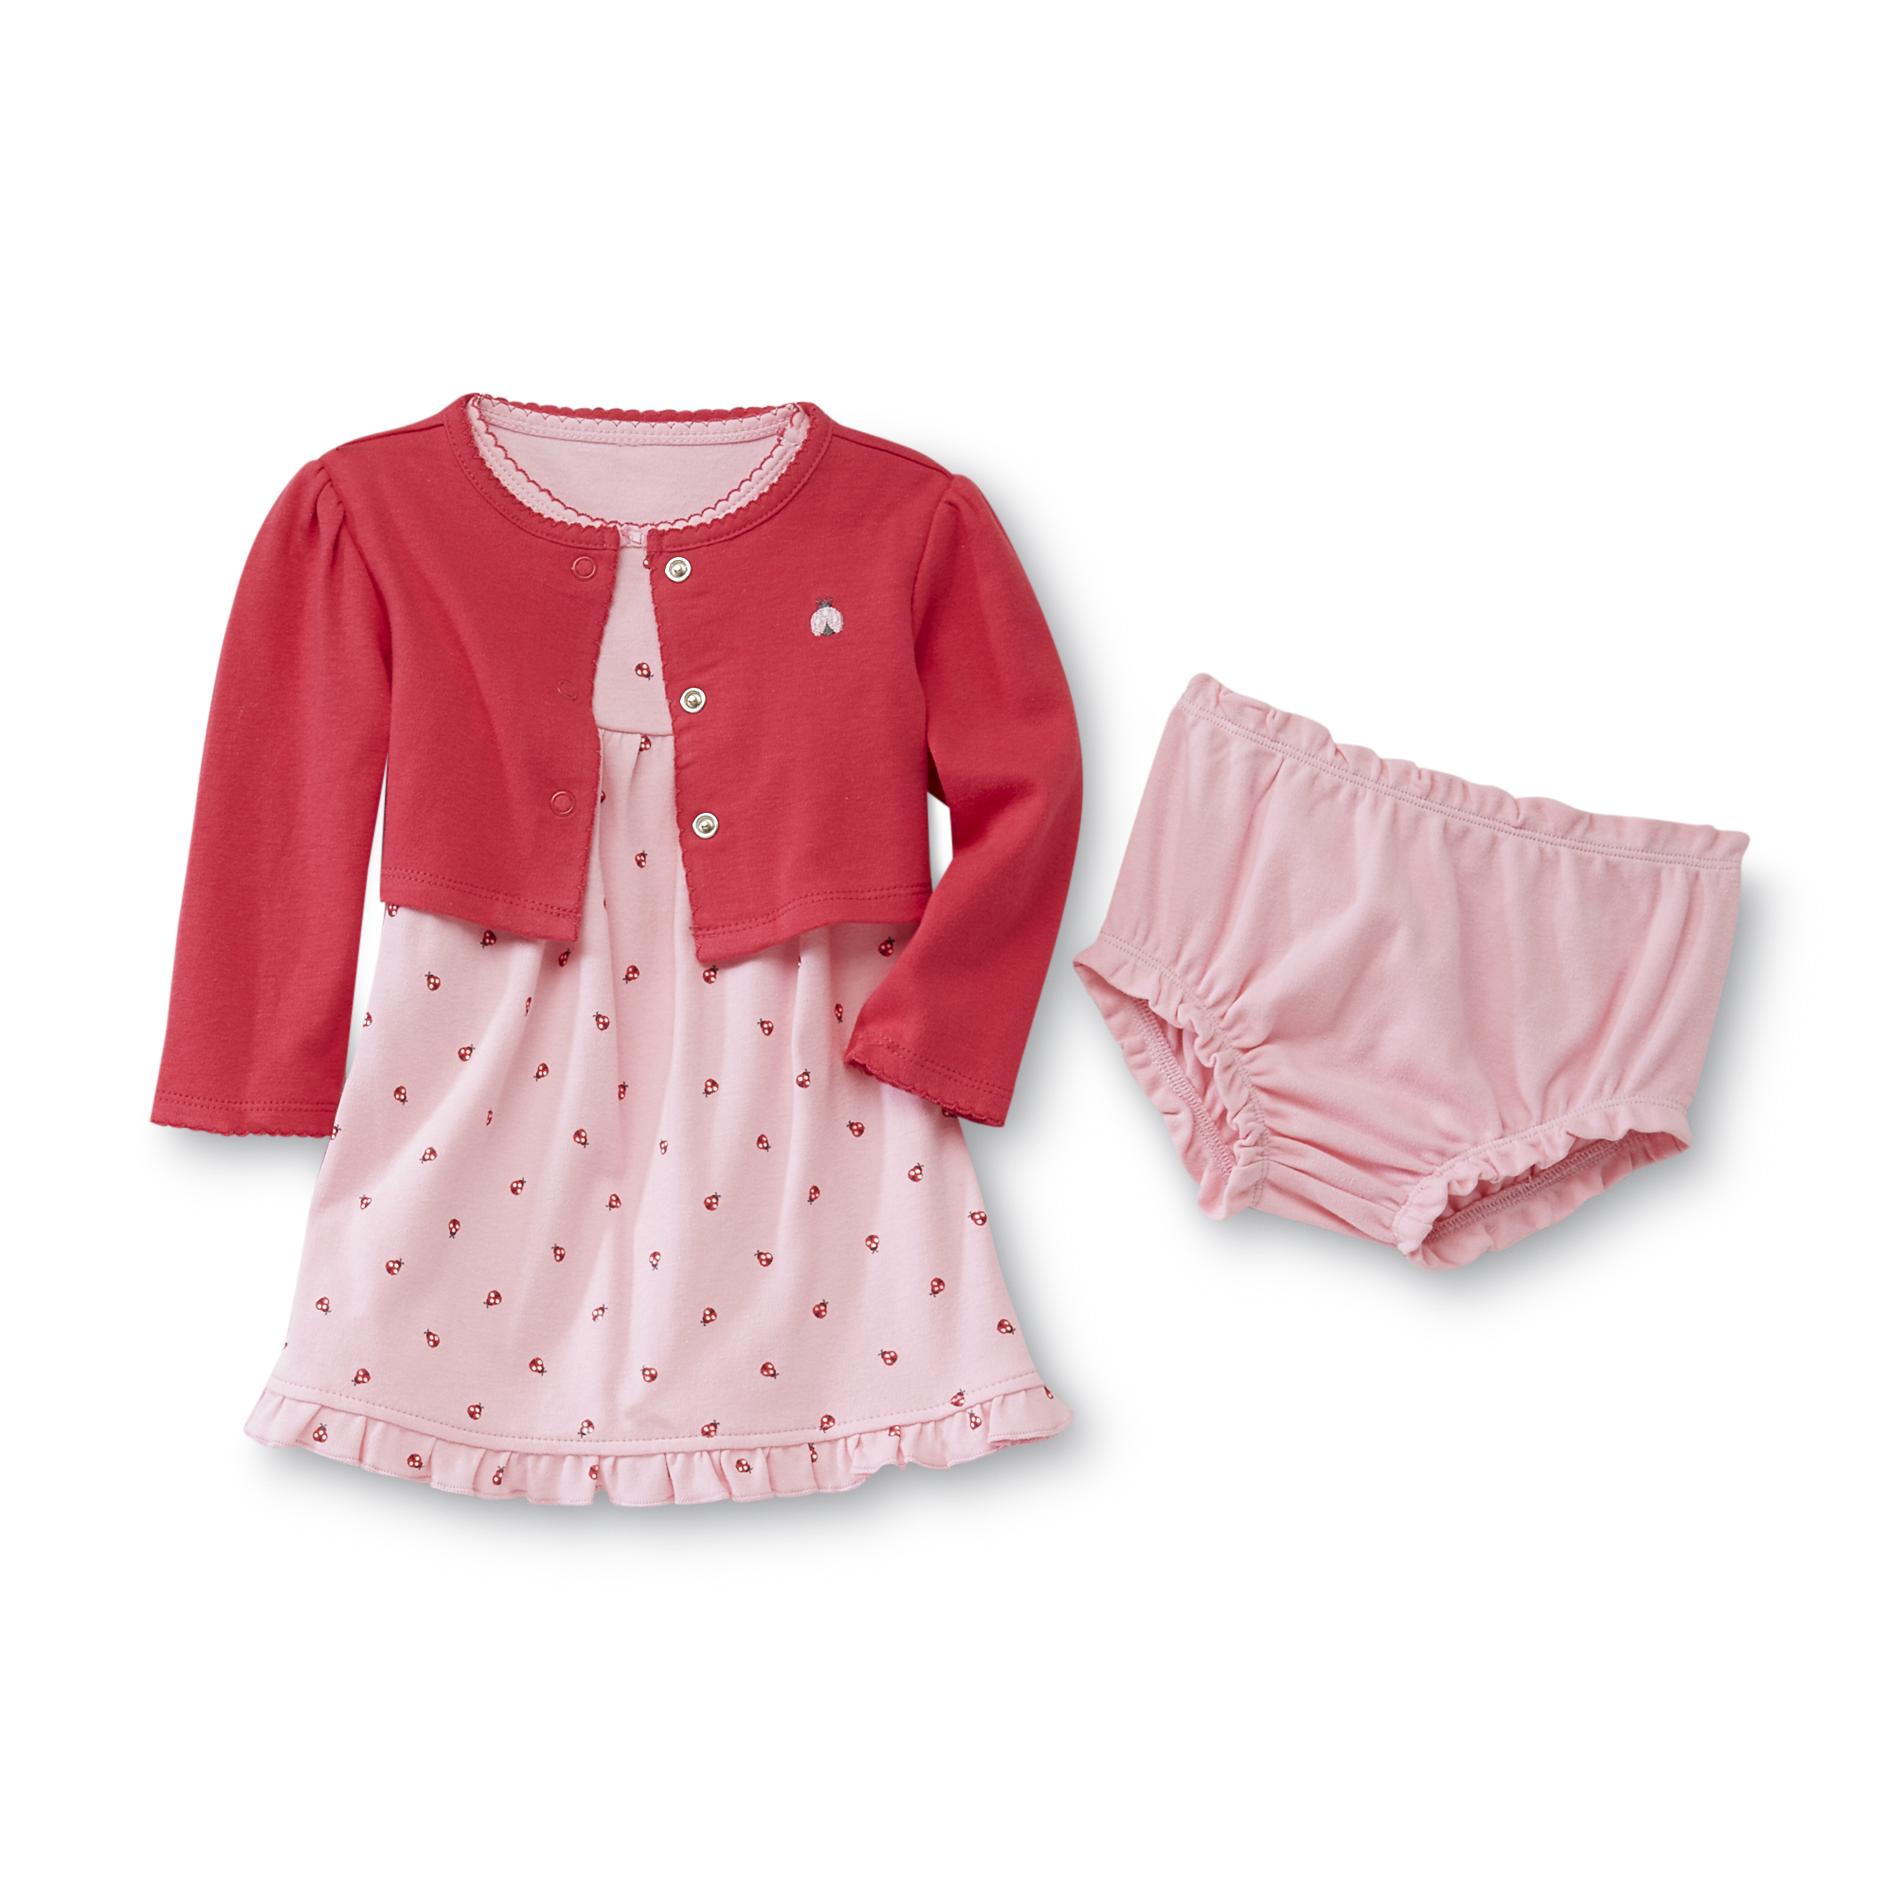 Small Wonders Newborn Girl's Sleeveless Dress  Cardigan & Diaper Cover - Ladybug